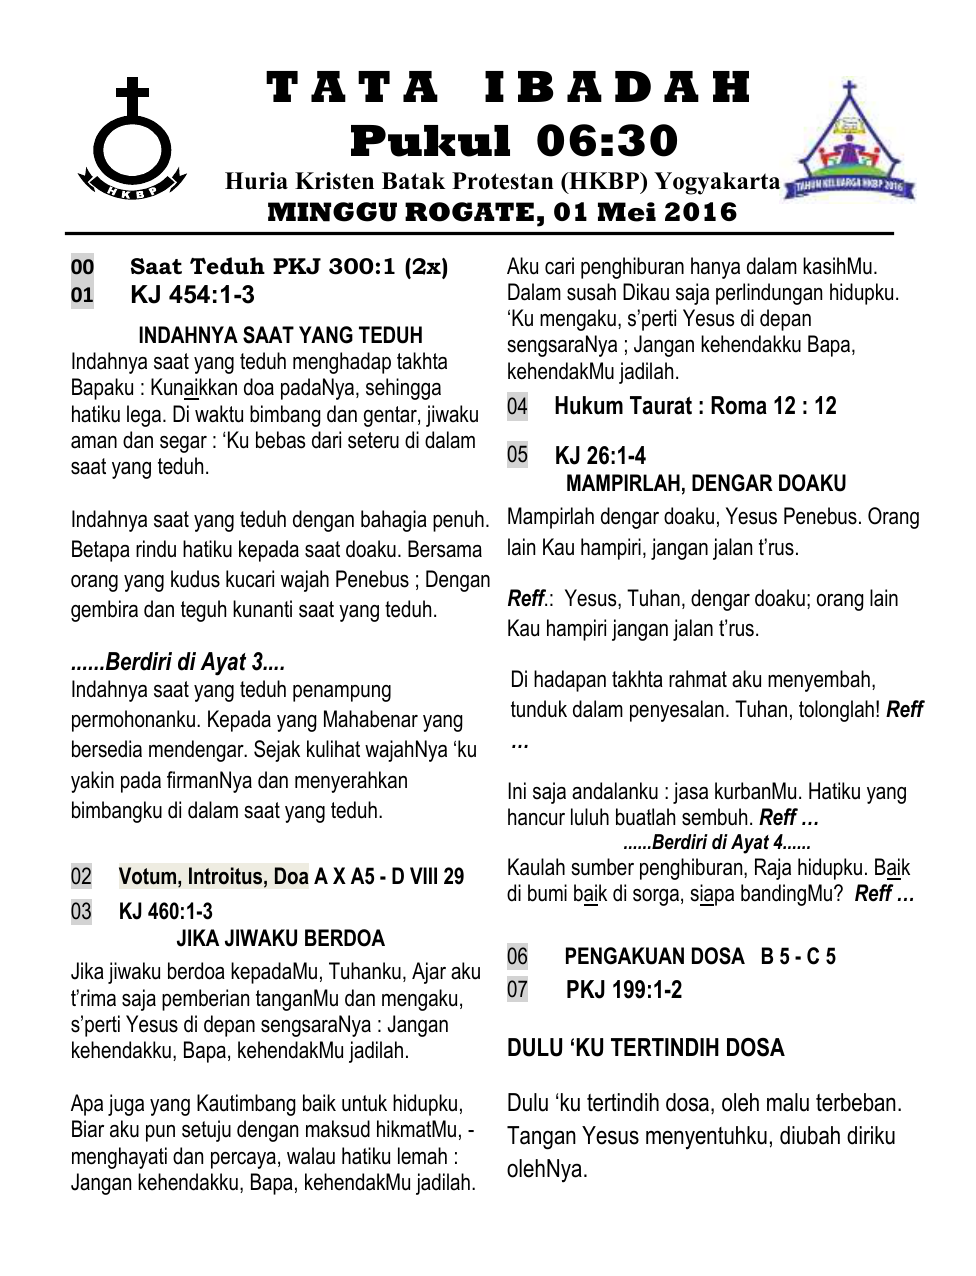 Tata Ibadah Minggu Rogate 01 Mei 2016 Bahasa Indonesia